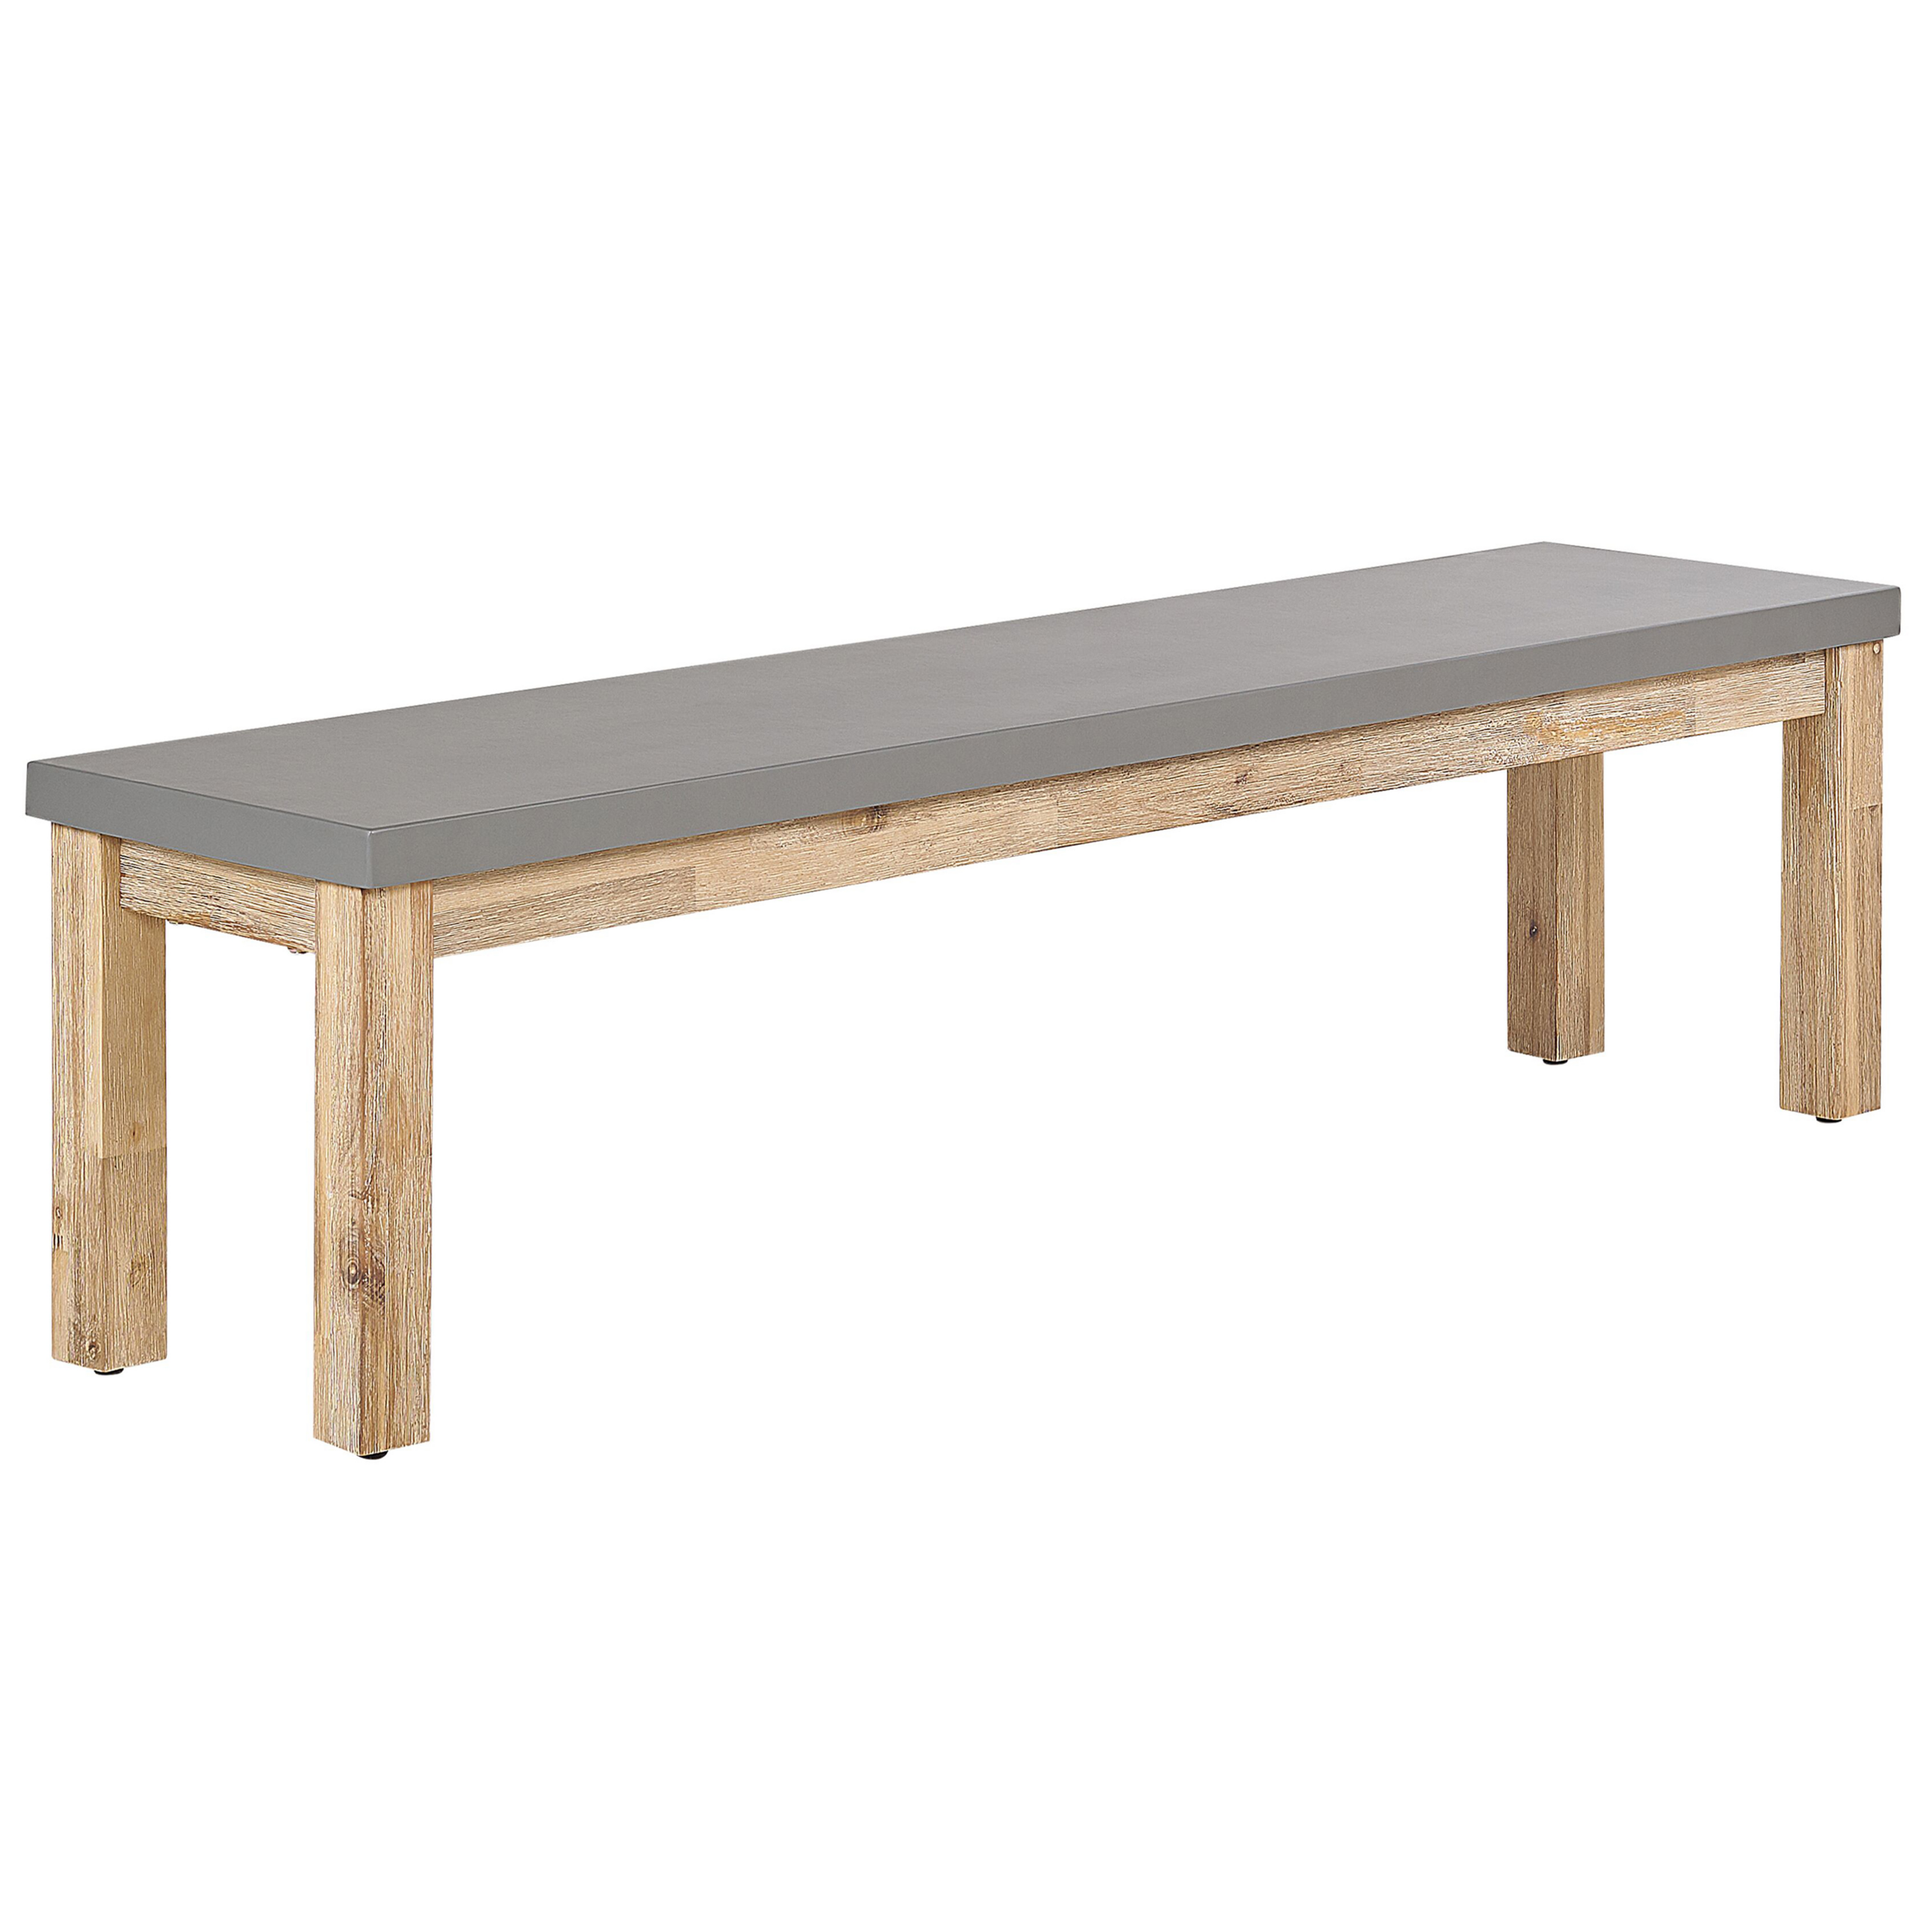 Beliani Outdoor Garden Bench Fibre Cement Top Grey Wooden Base 3 Seater 180 x 90 cm Modern Industrial Patio Furniture  Material:Fibre Cement Size:40x45x160